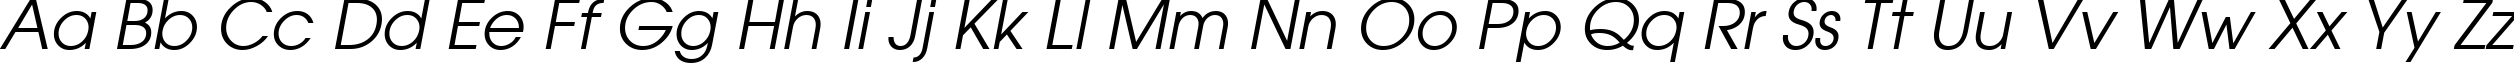 Пример написания английского алфавита шрифтом ITC Avant Garde Gothic Book Oblique